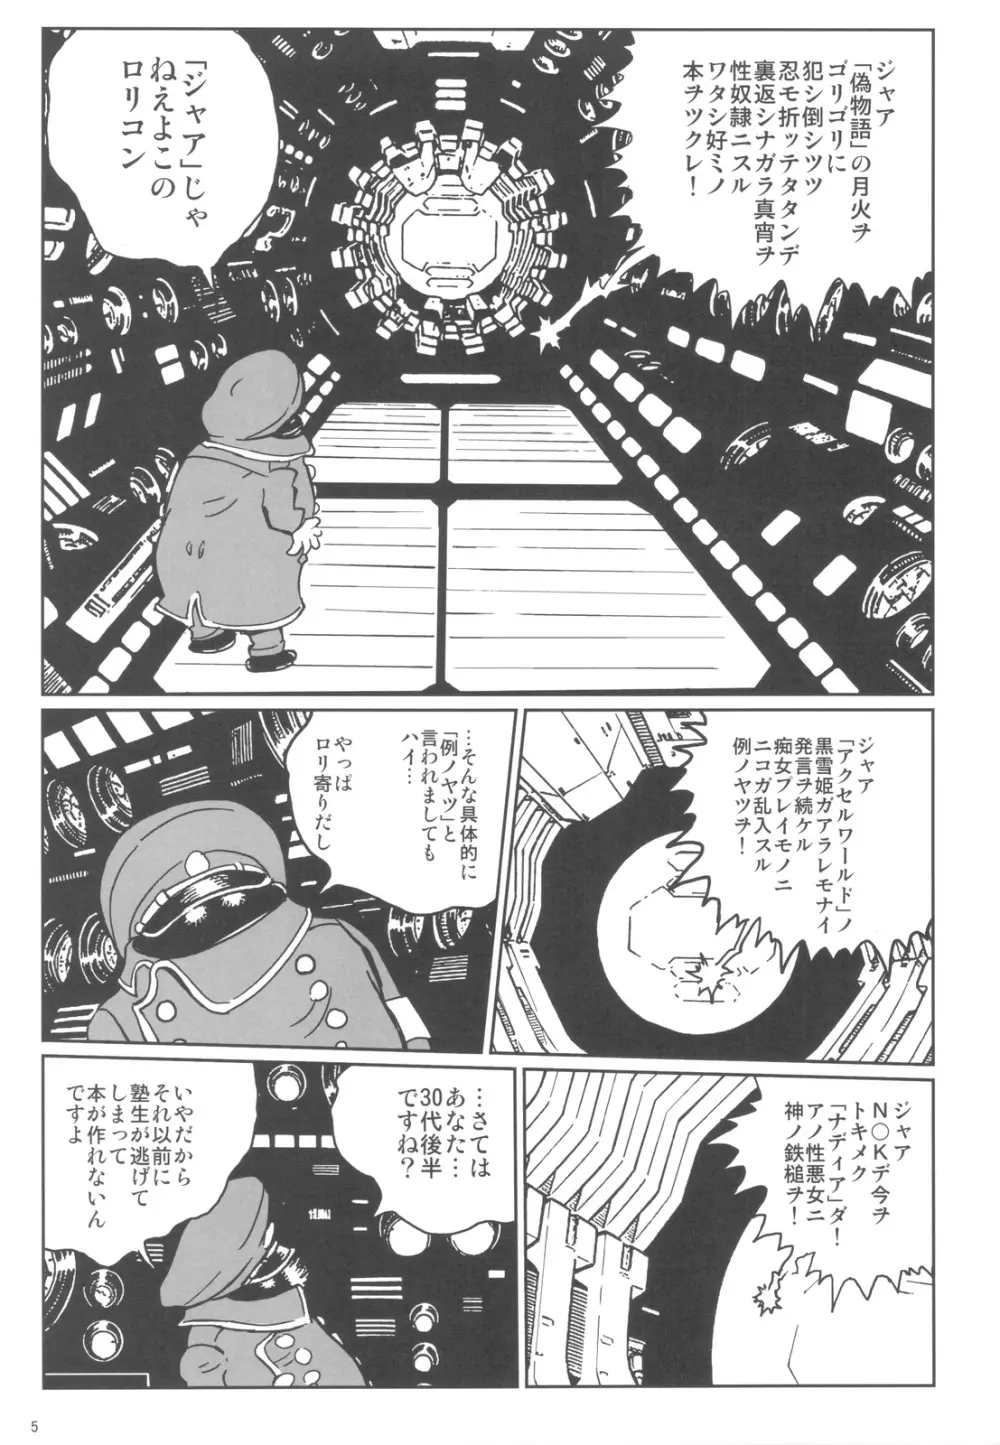 六道塾塾報 - page4